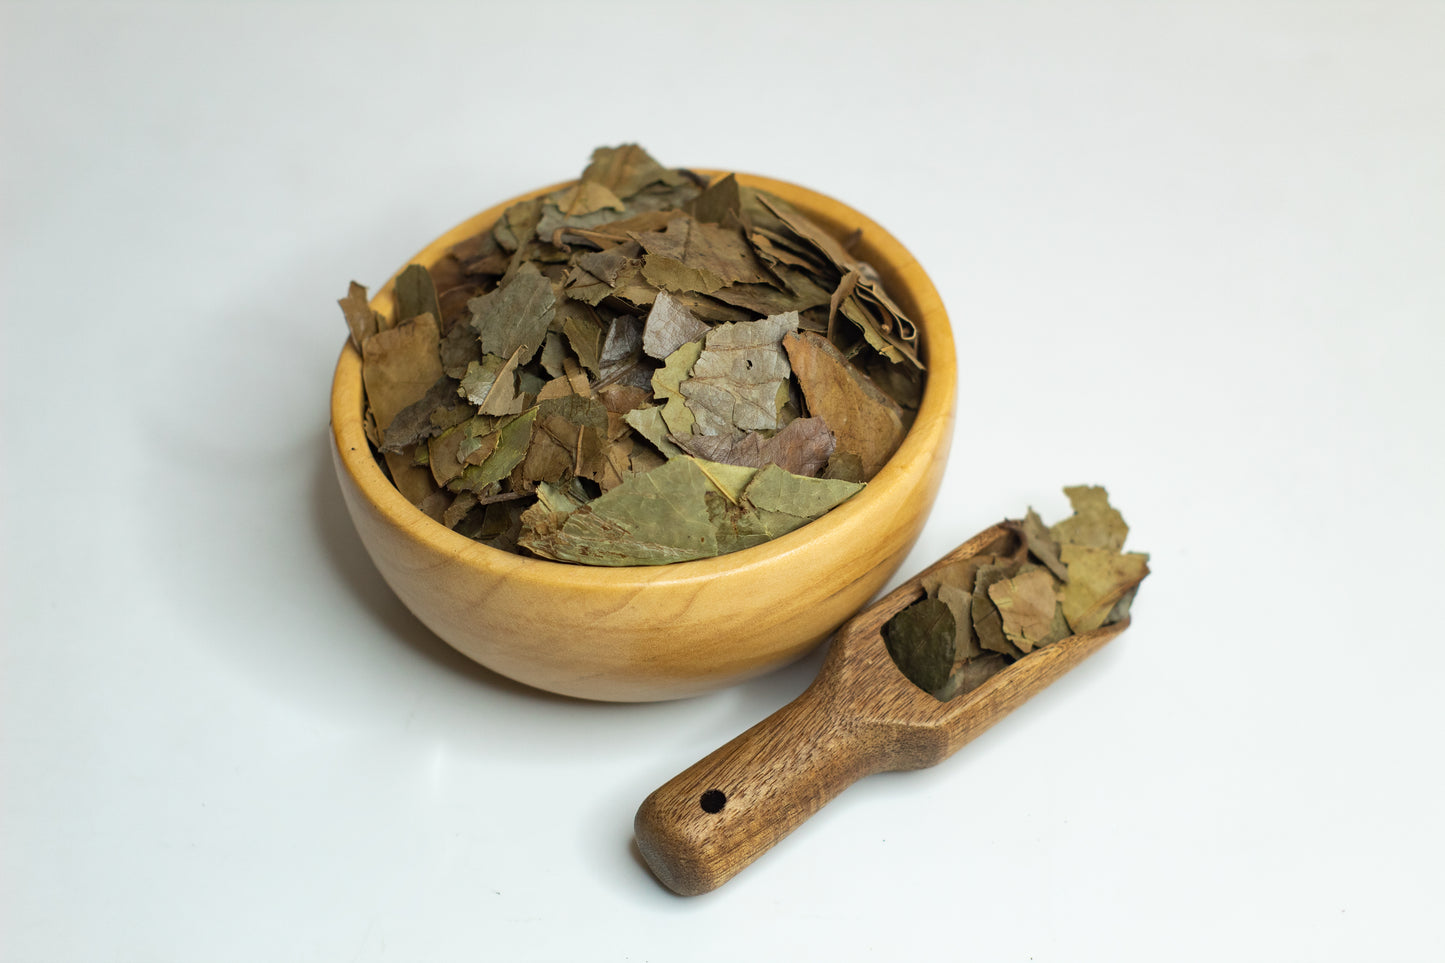  Hojas De Guanabana Soursop Loose Leaf Premium Herb Tea (35g) 1.05oz by Nuestra Salud sold by NS Herbs Co.